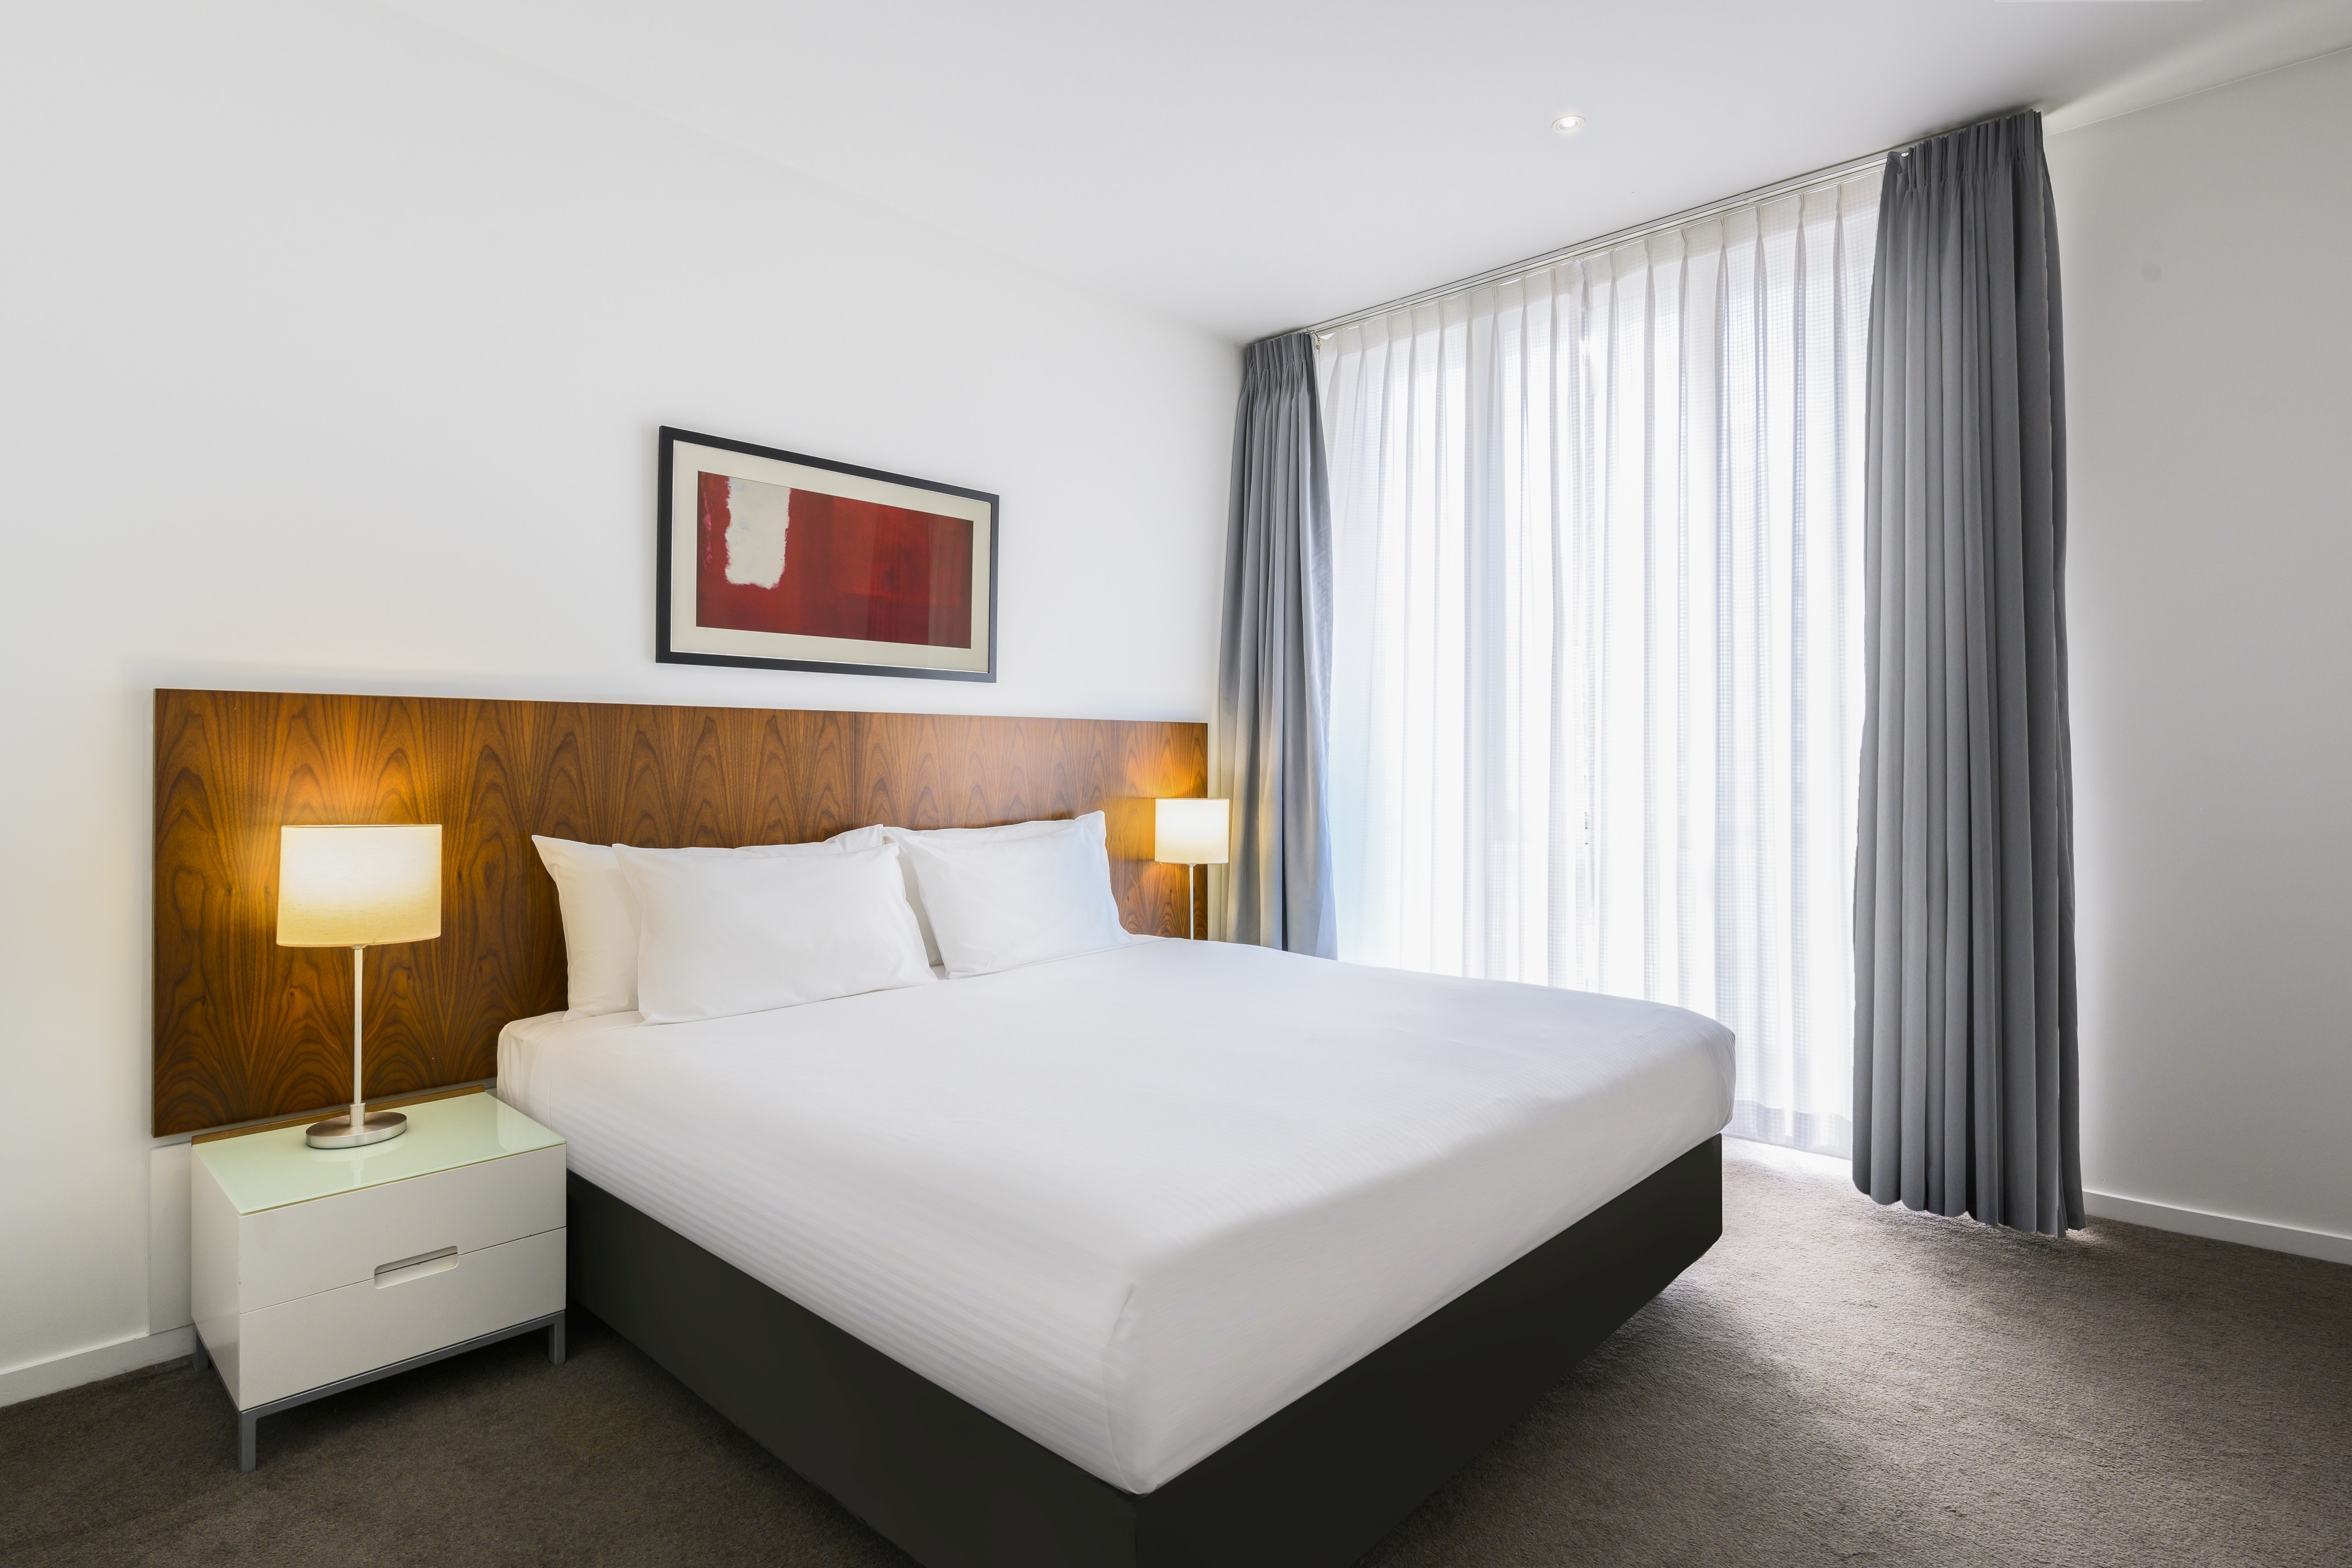 Adina Apartment Hotel Melbourne, Flinders Street | 88 Flinders Street, Melbourne, Victoria 3000 | +61 3 8663 0000